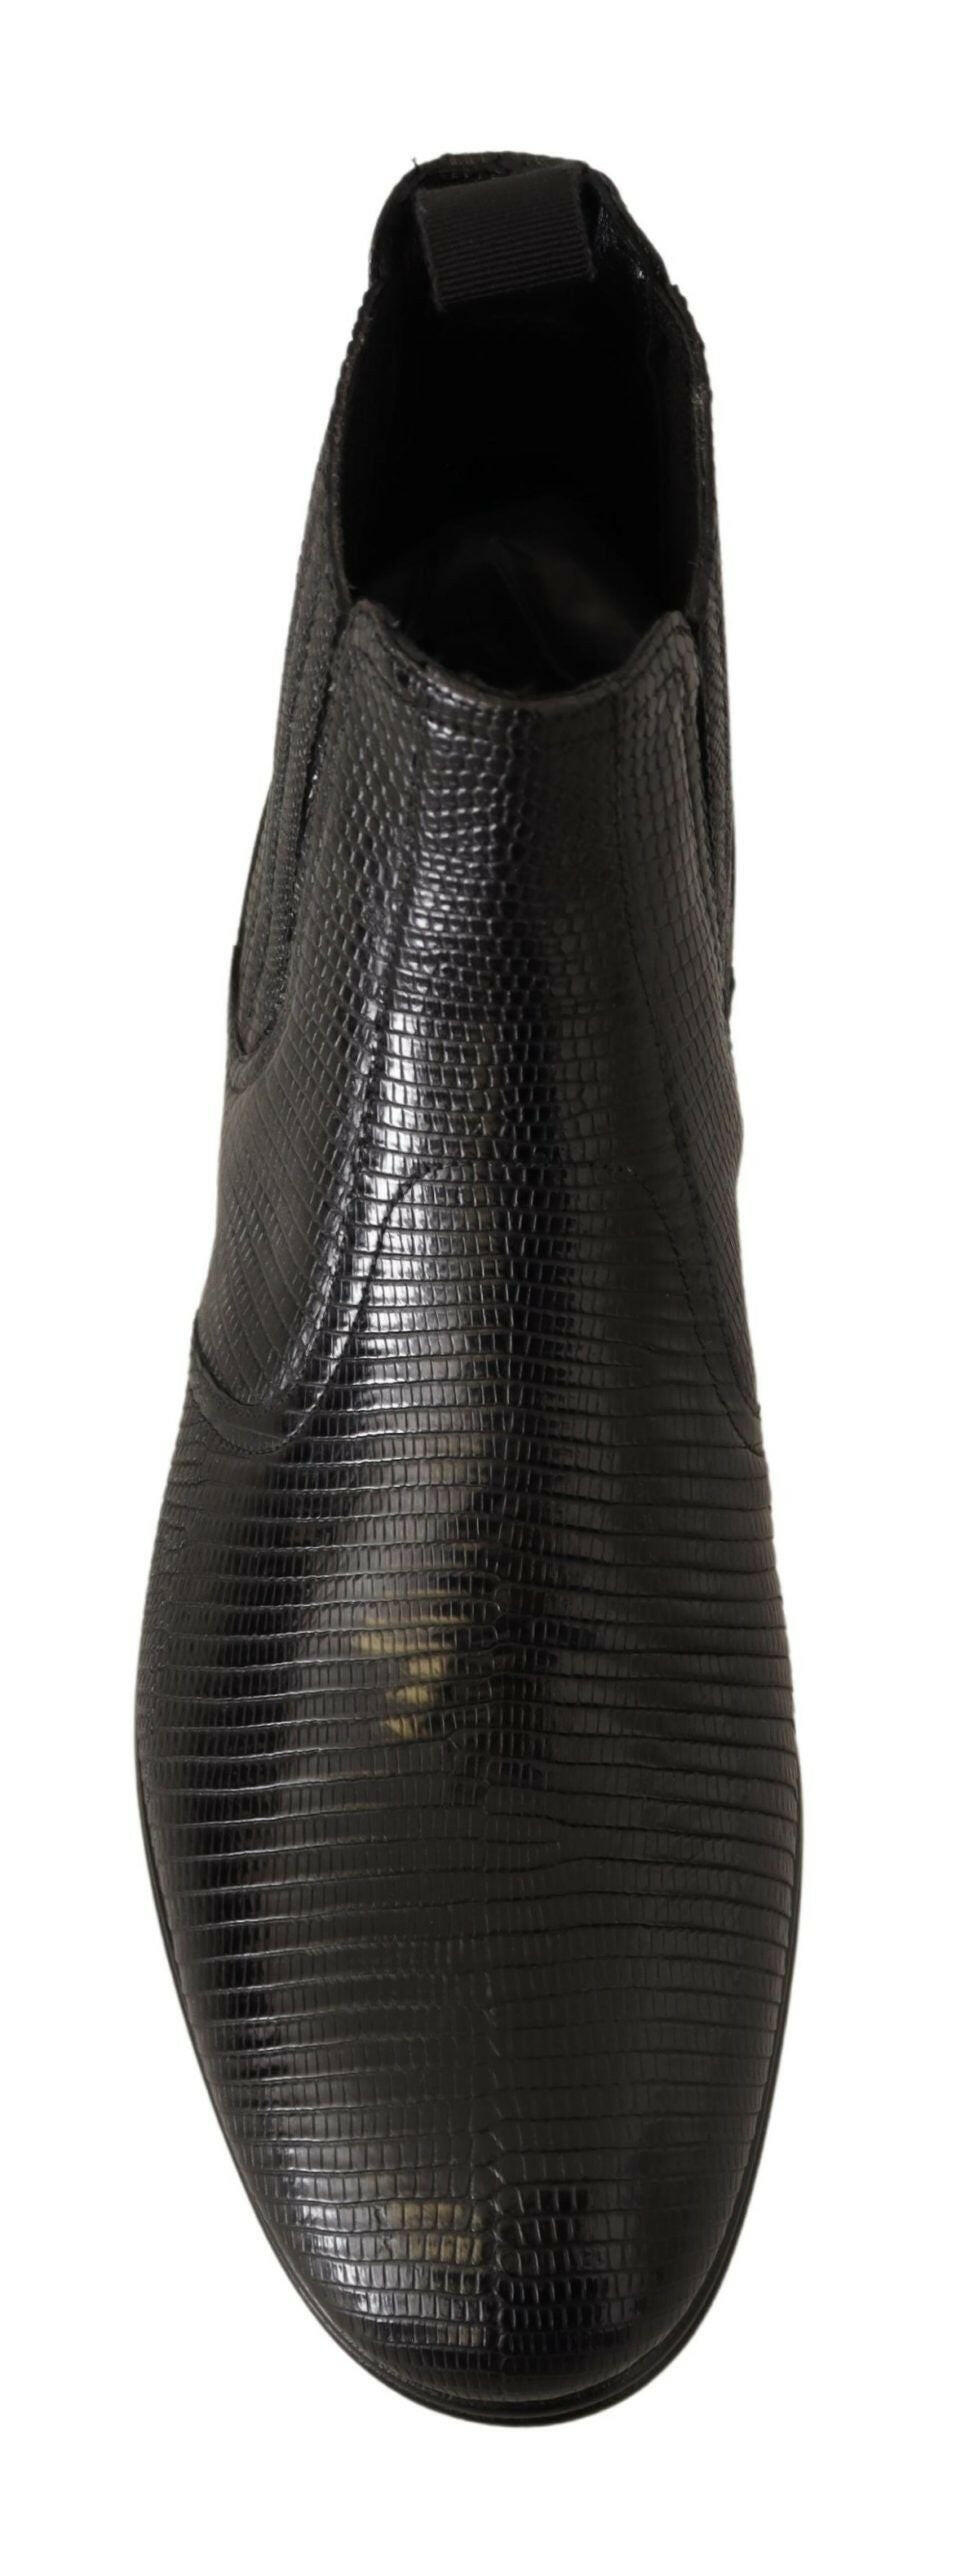 Dolce & Gabbana Black Leather Lizard Skin Ankle Boots - GENUINE AUTHENTIC BRAND LLC  